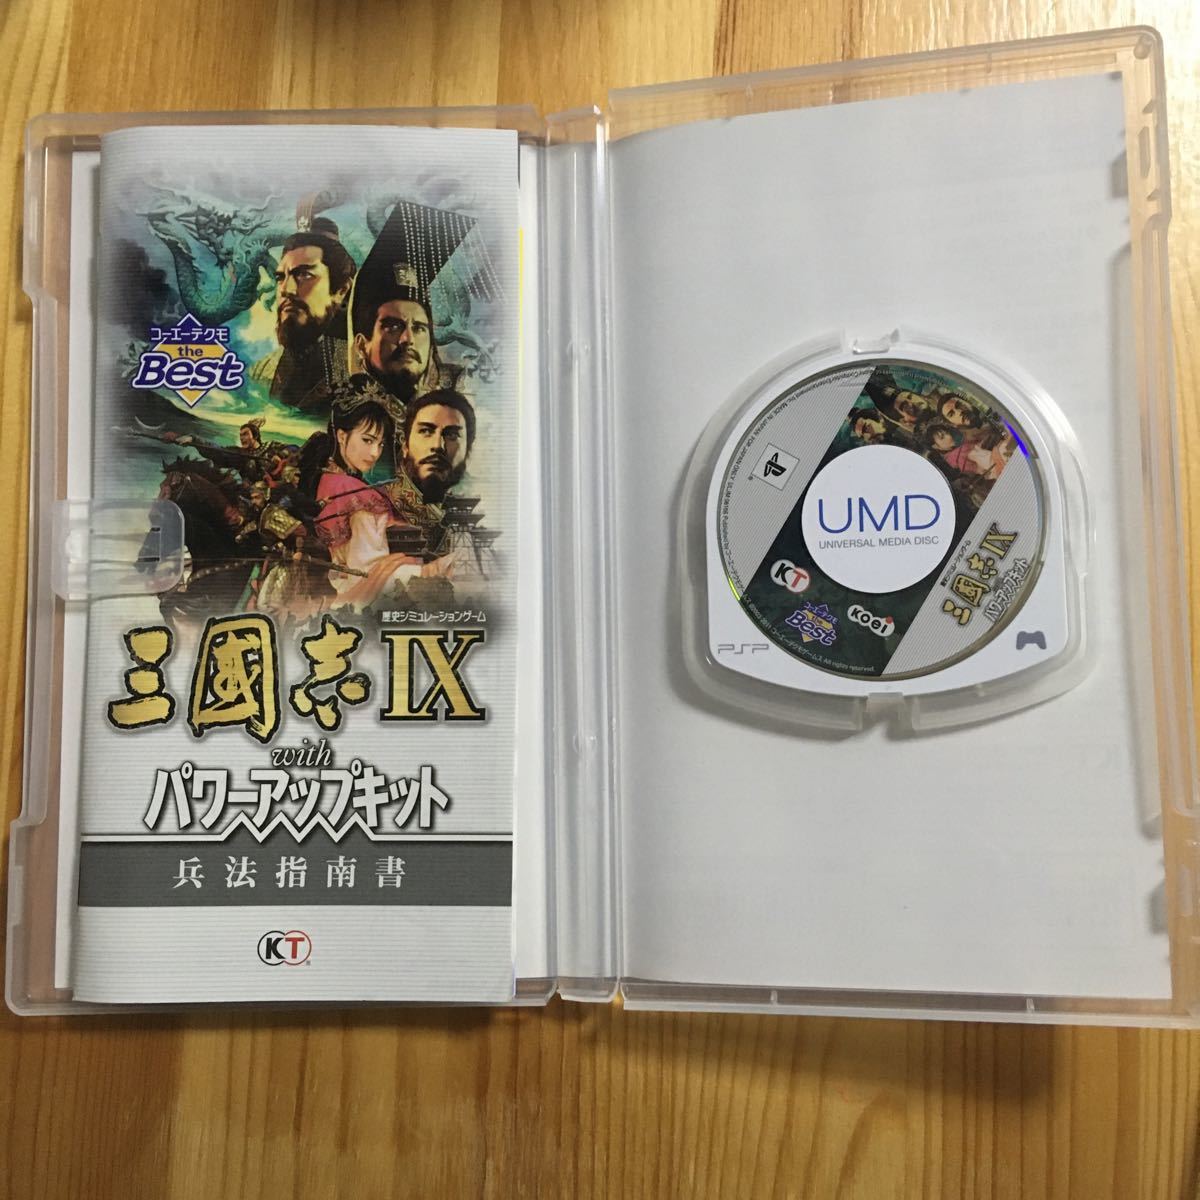 【PSP】 三國志IX with パワーアップキット [コーエーテクモ the Best］